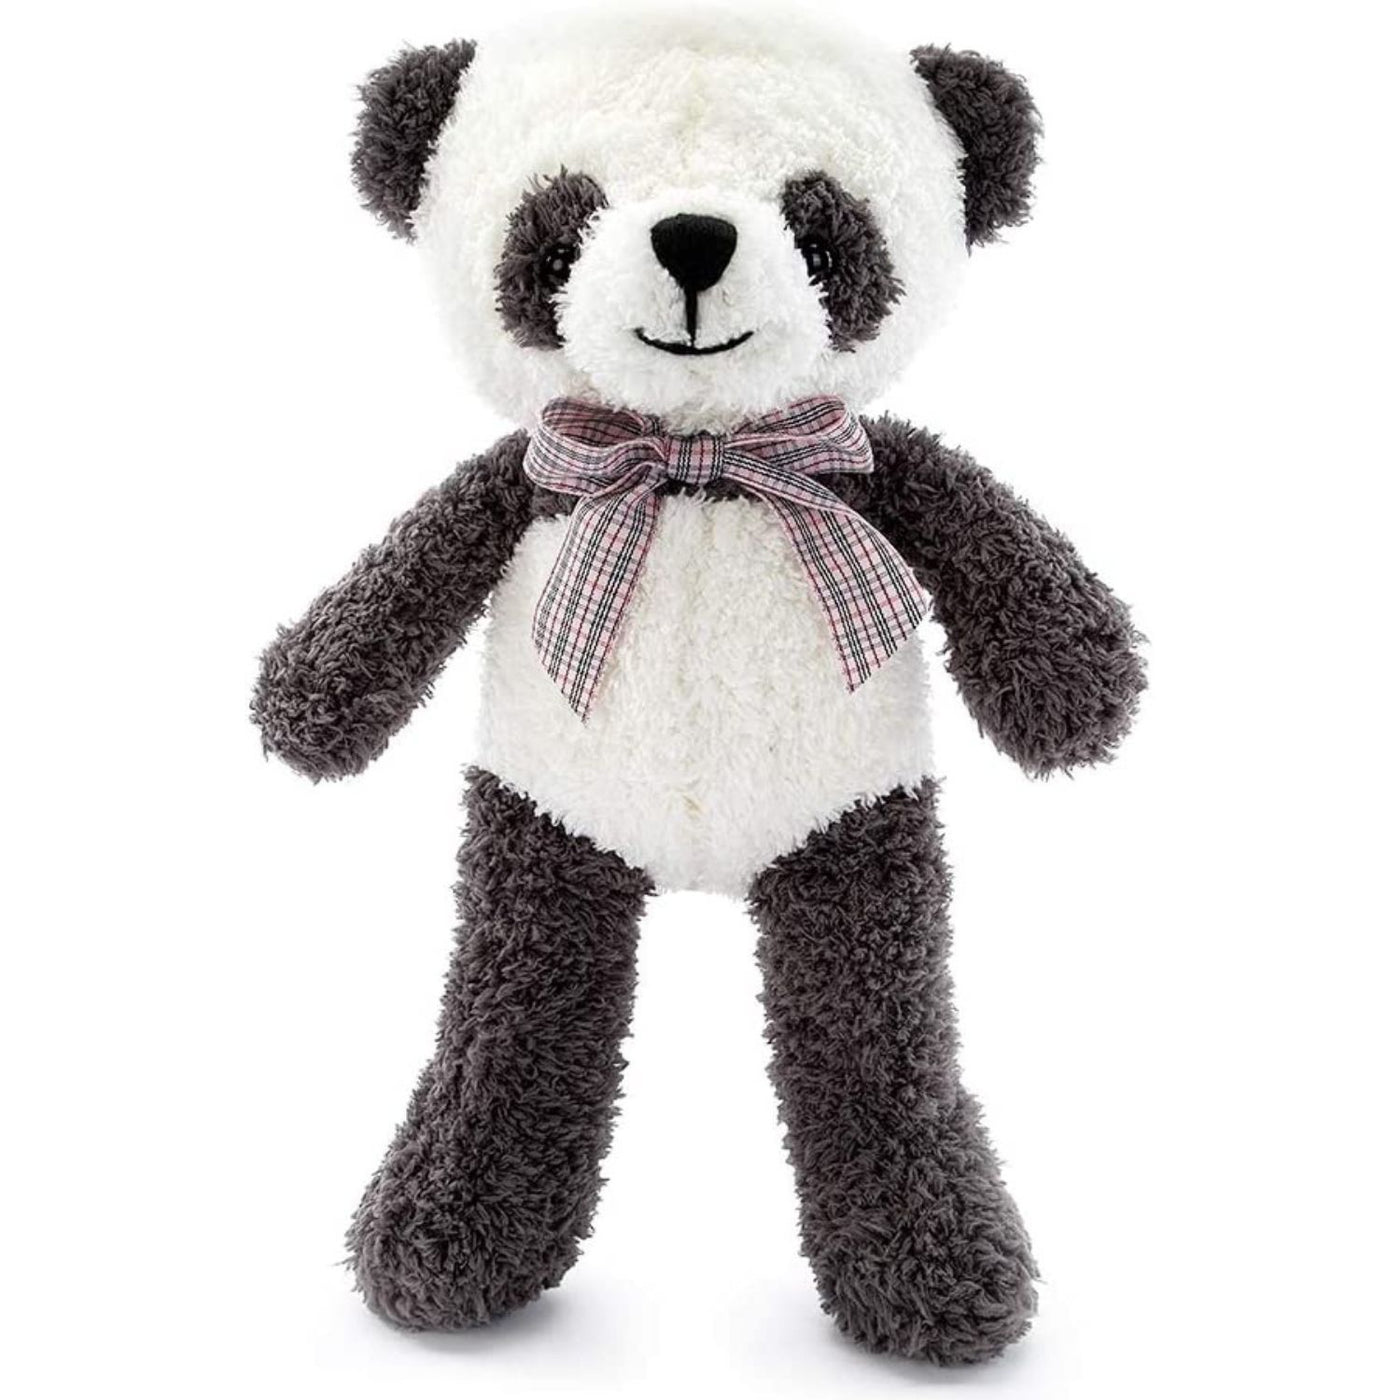 3 Packs Stuffed Animal Toy Set ( Bunny, Monkey, Panda ), 13.5 Inches - MorisMos Plush Toys